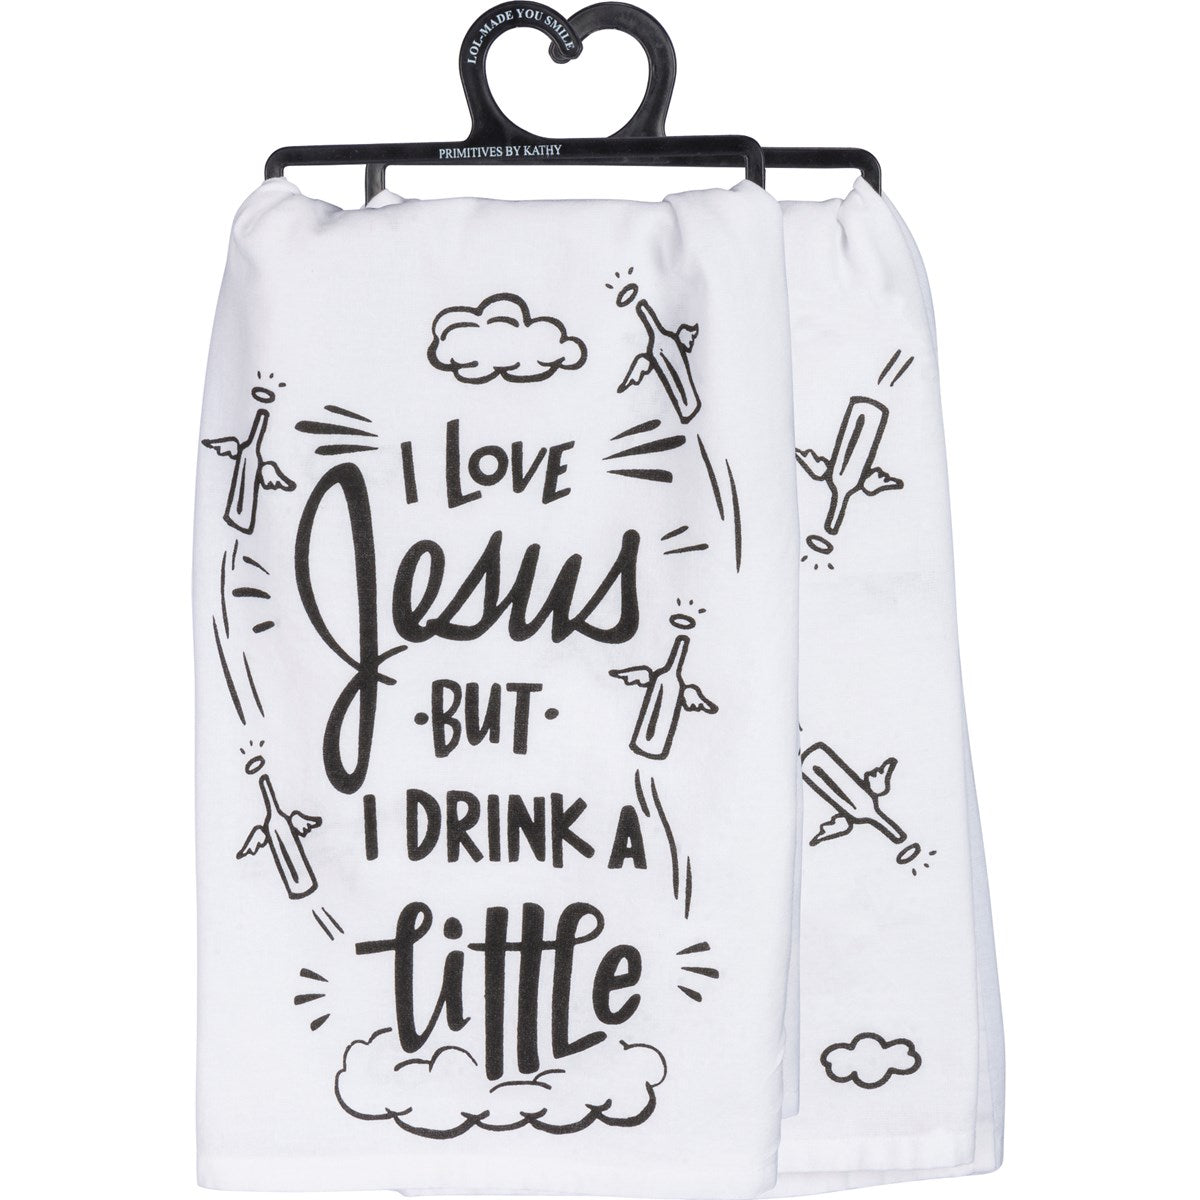 "I LOVE JESUS, BUT I DRINK A LITTLE" DISH TOWEL